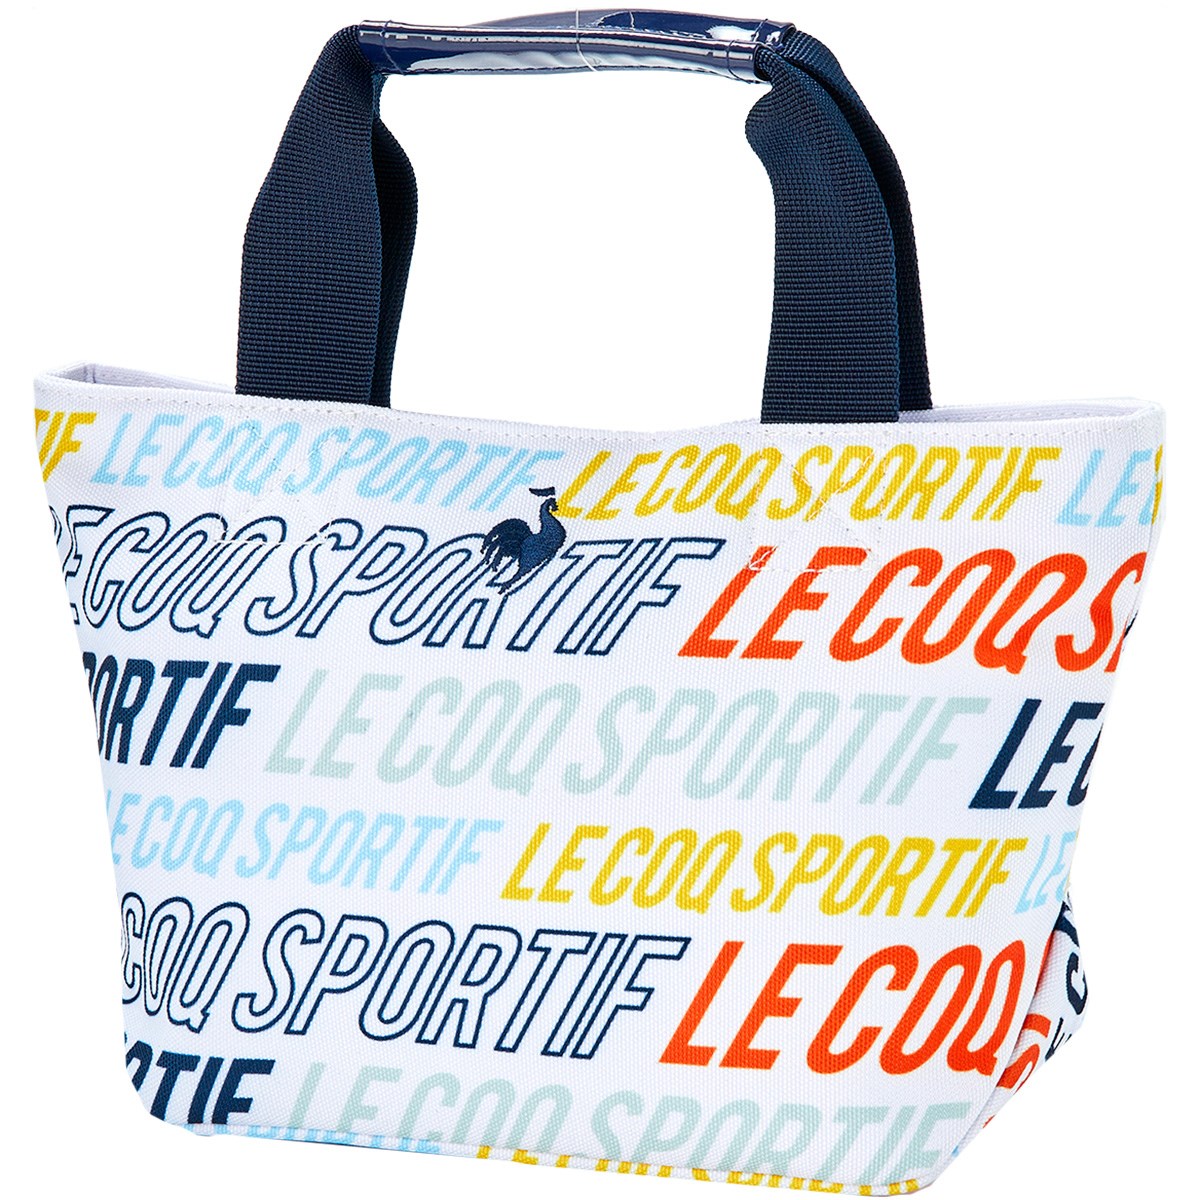 dショッピング |ルコックゴルフ Le coq sportif GOLF インパクトグラフィック カートバッグ ホワイト 00 | カテゴリ